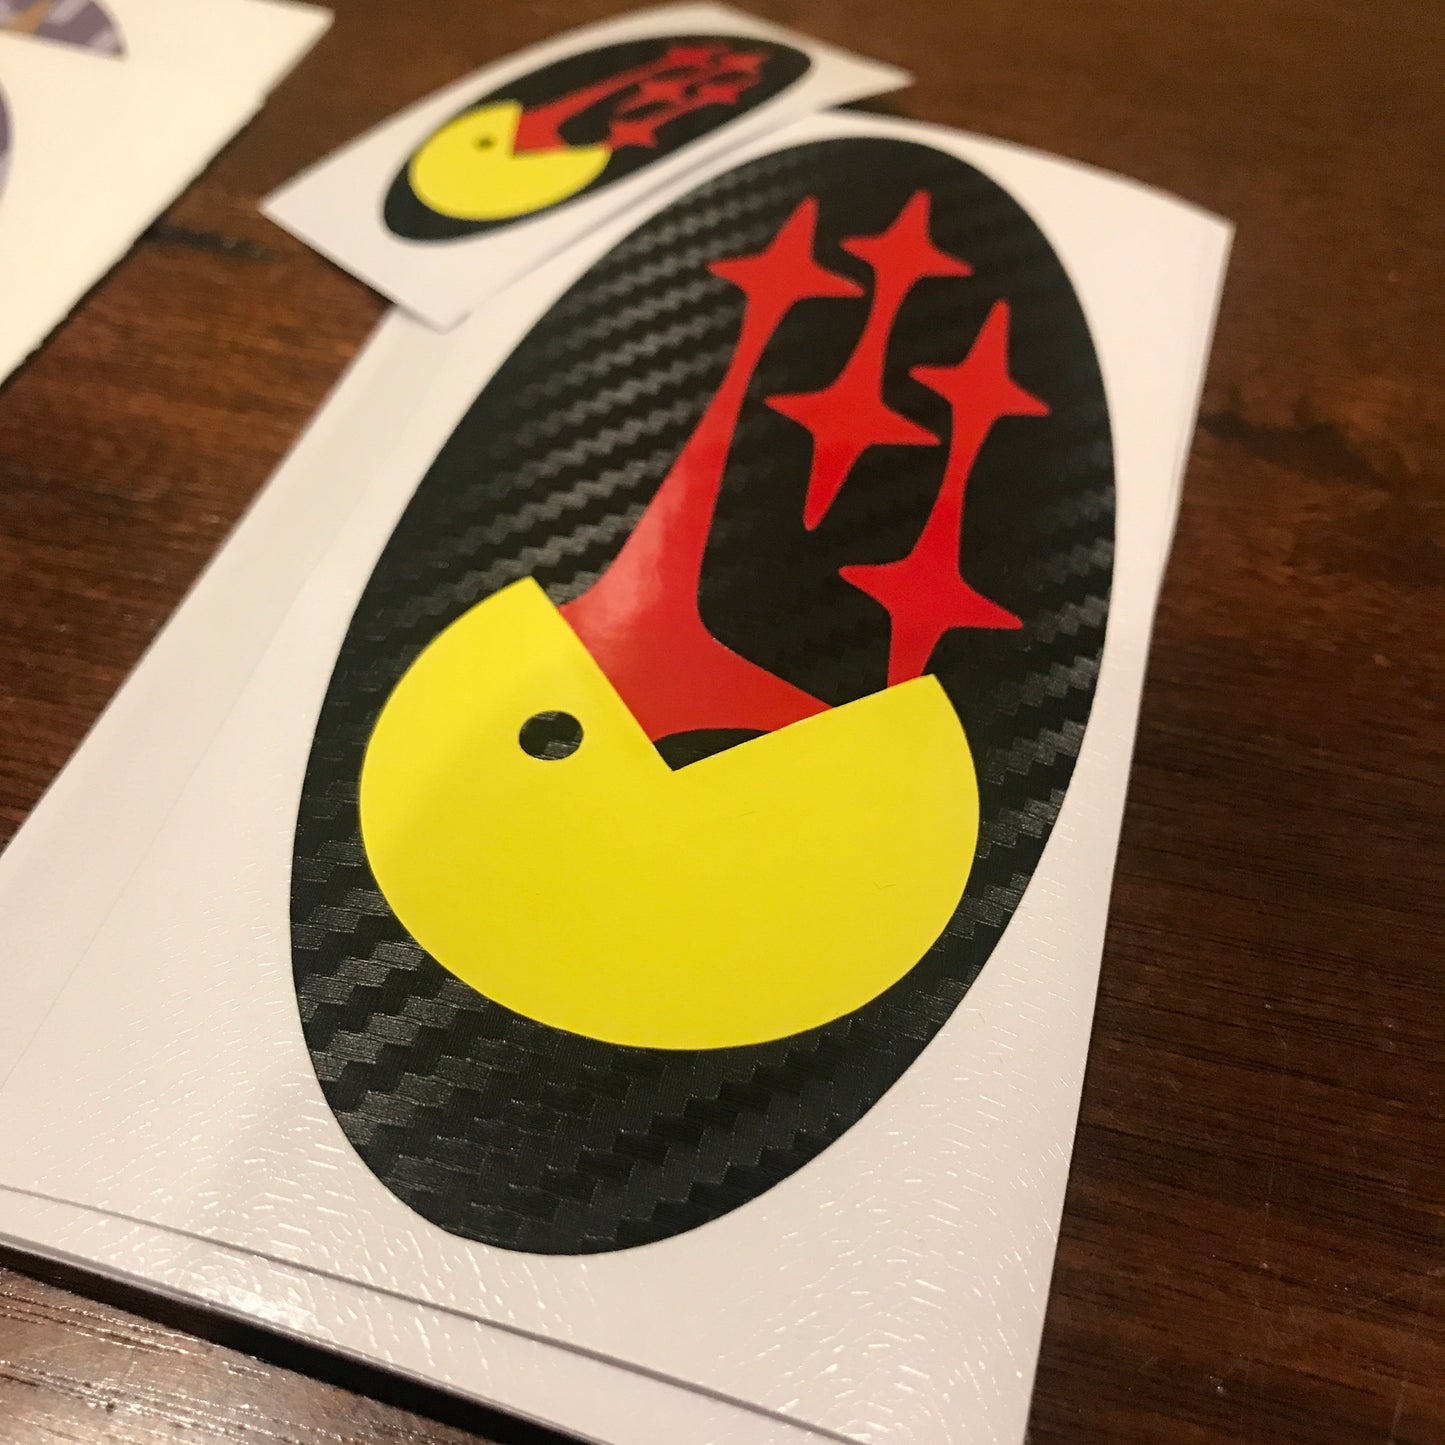 Pac-Man Emblem Overlay Decal Set